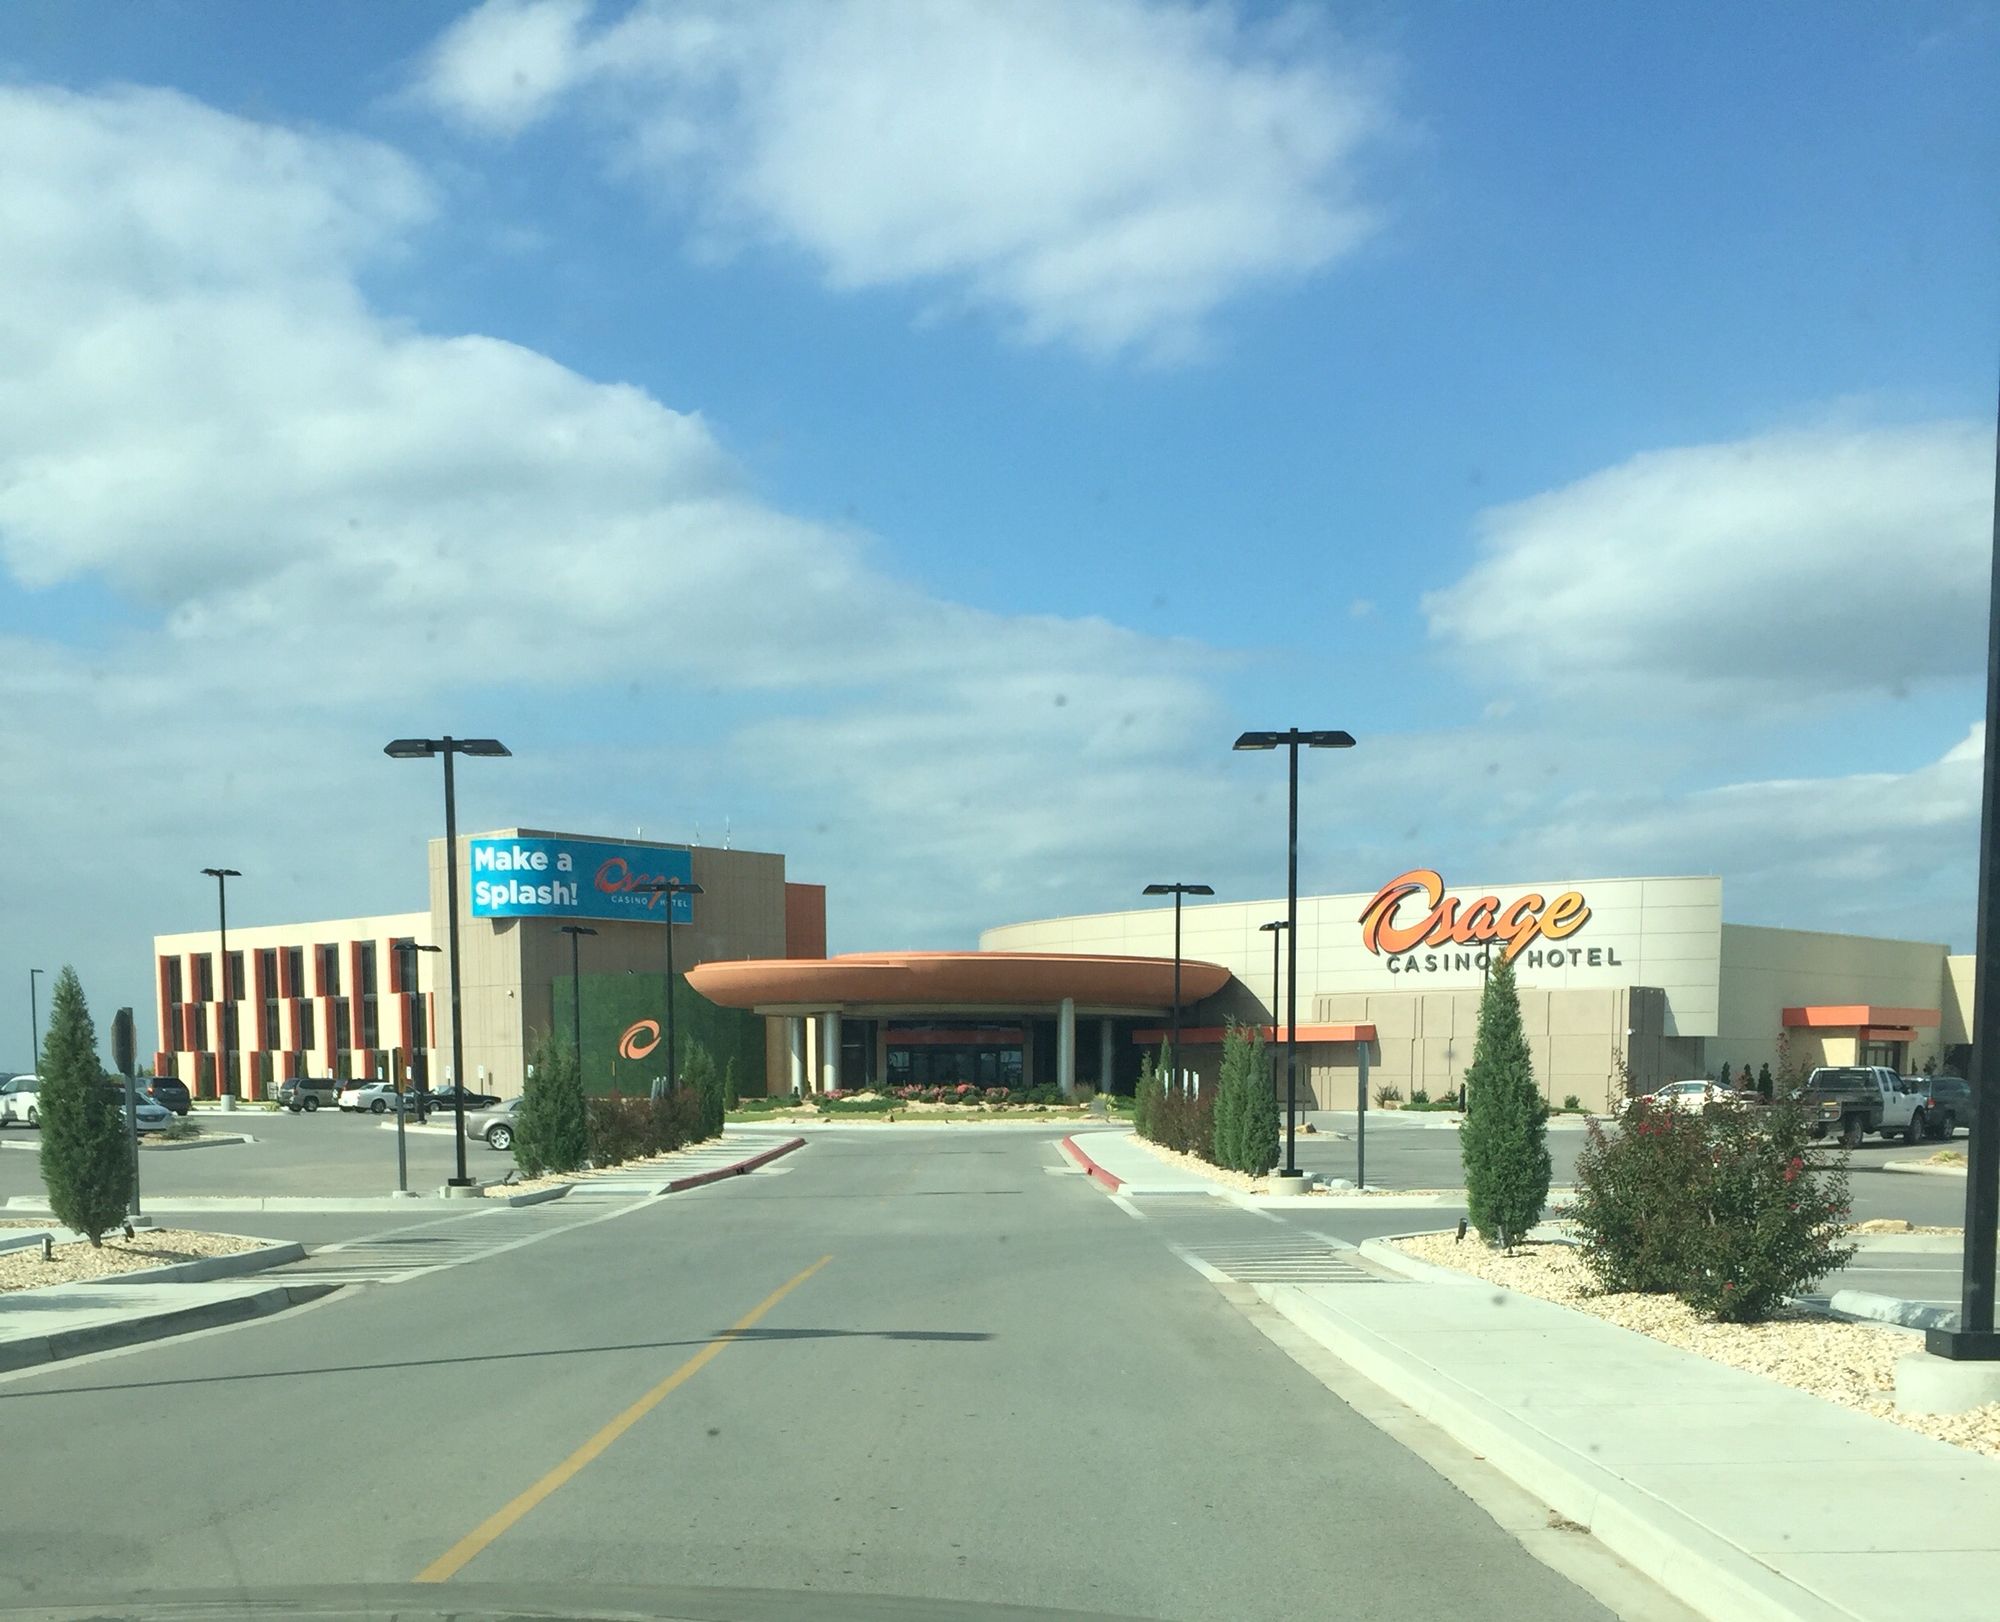 Osage casino & hotel in ponca city oklahoma